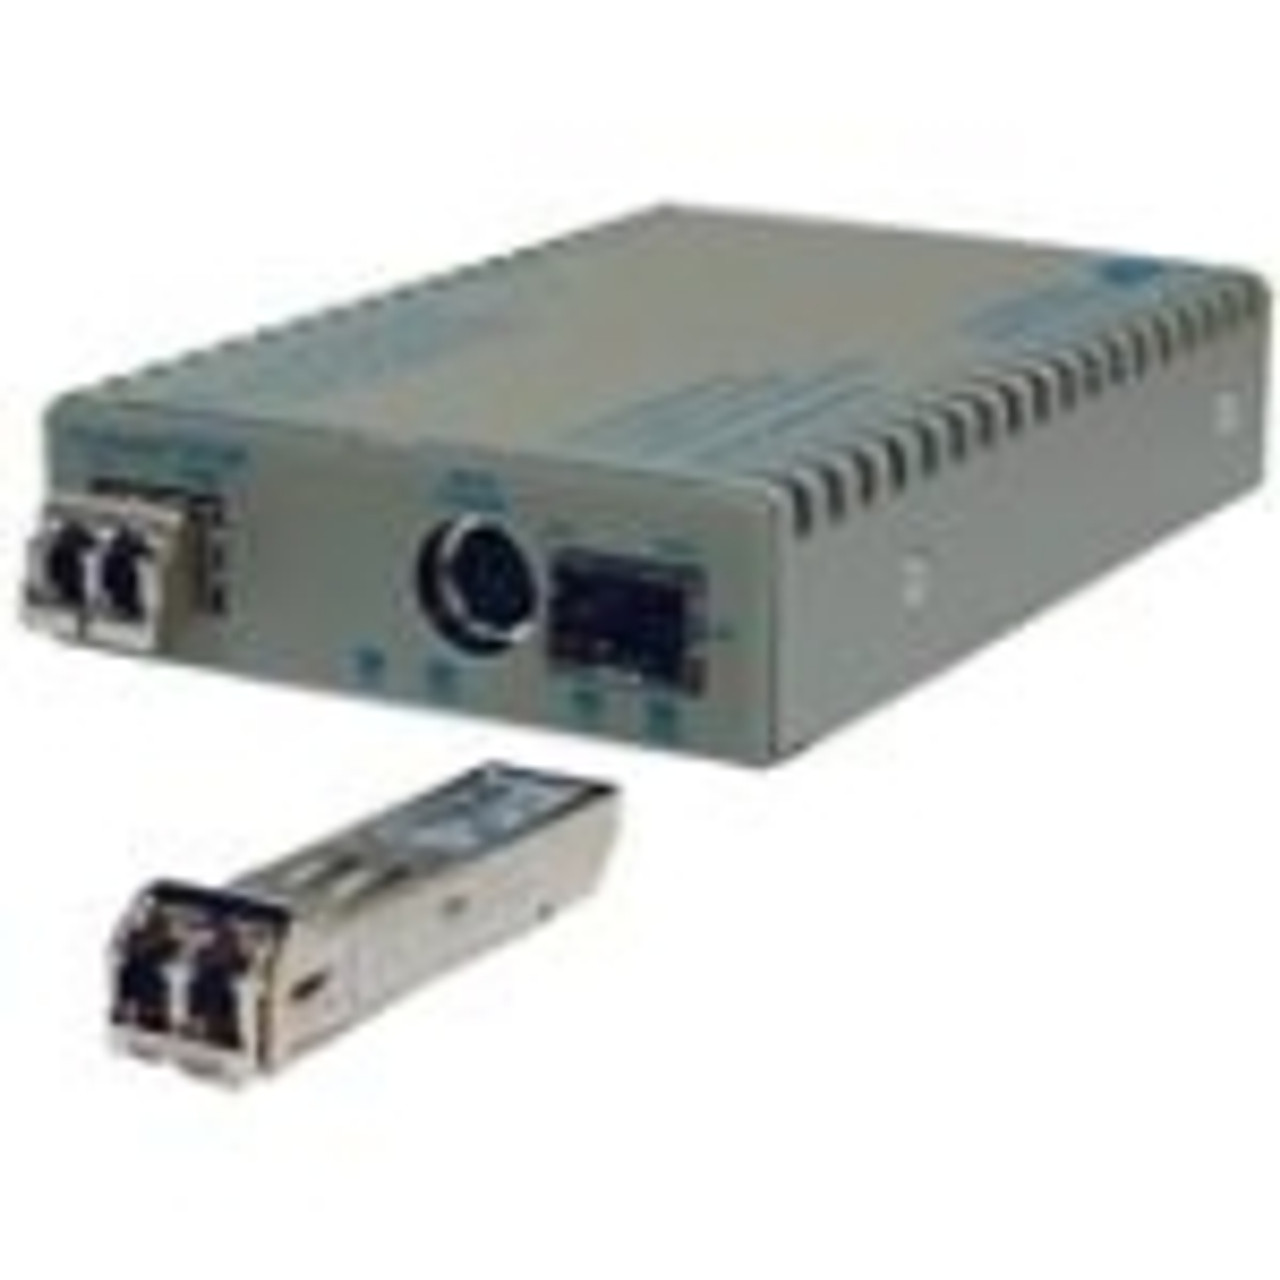 7135-2 Omnitron Systems 100Mbps 100Base-X CWDM Single-mode Fiber 80km 1351nm SFP Transceiver Module